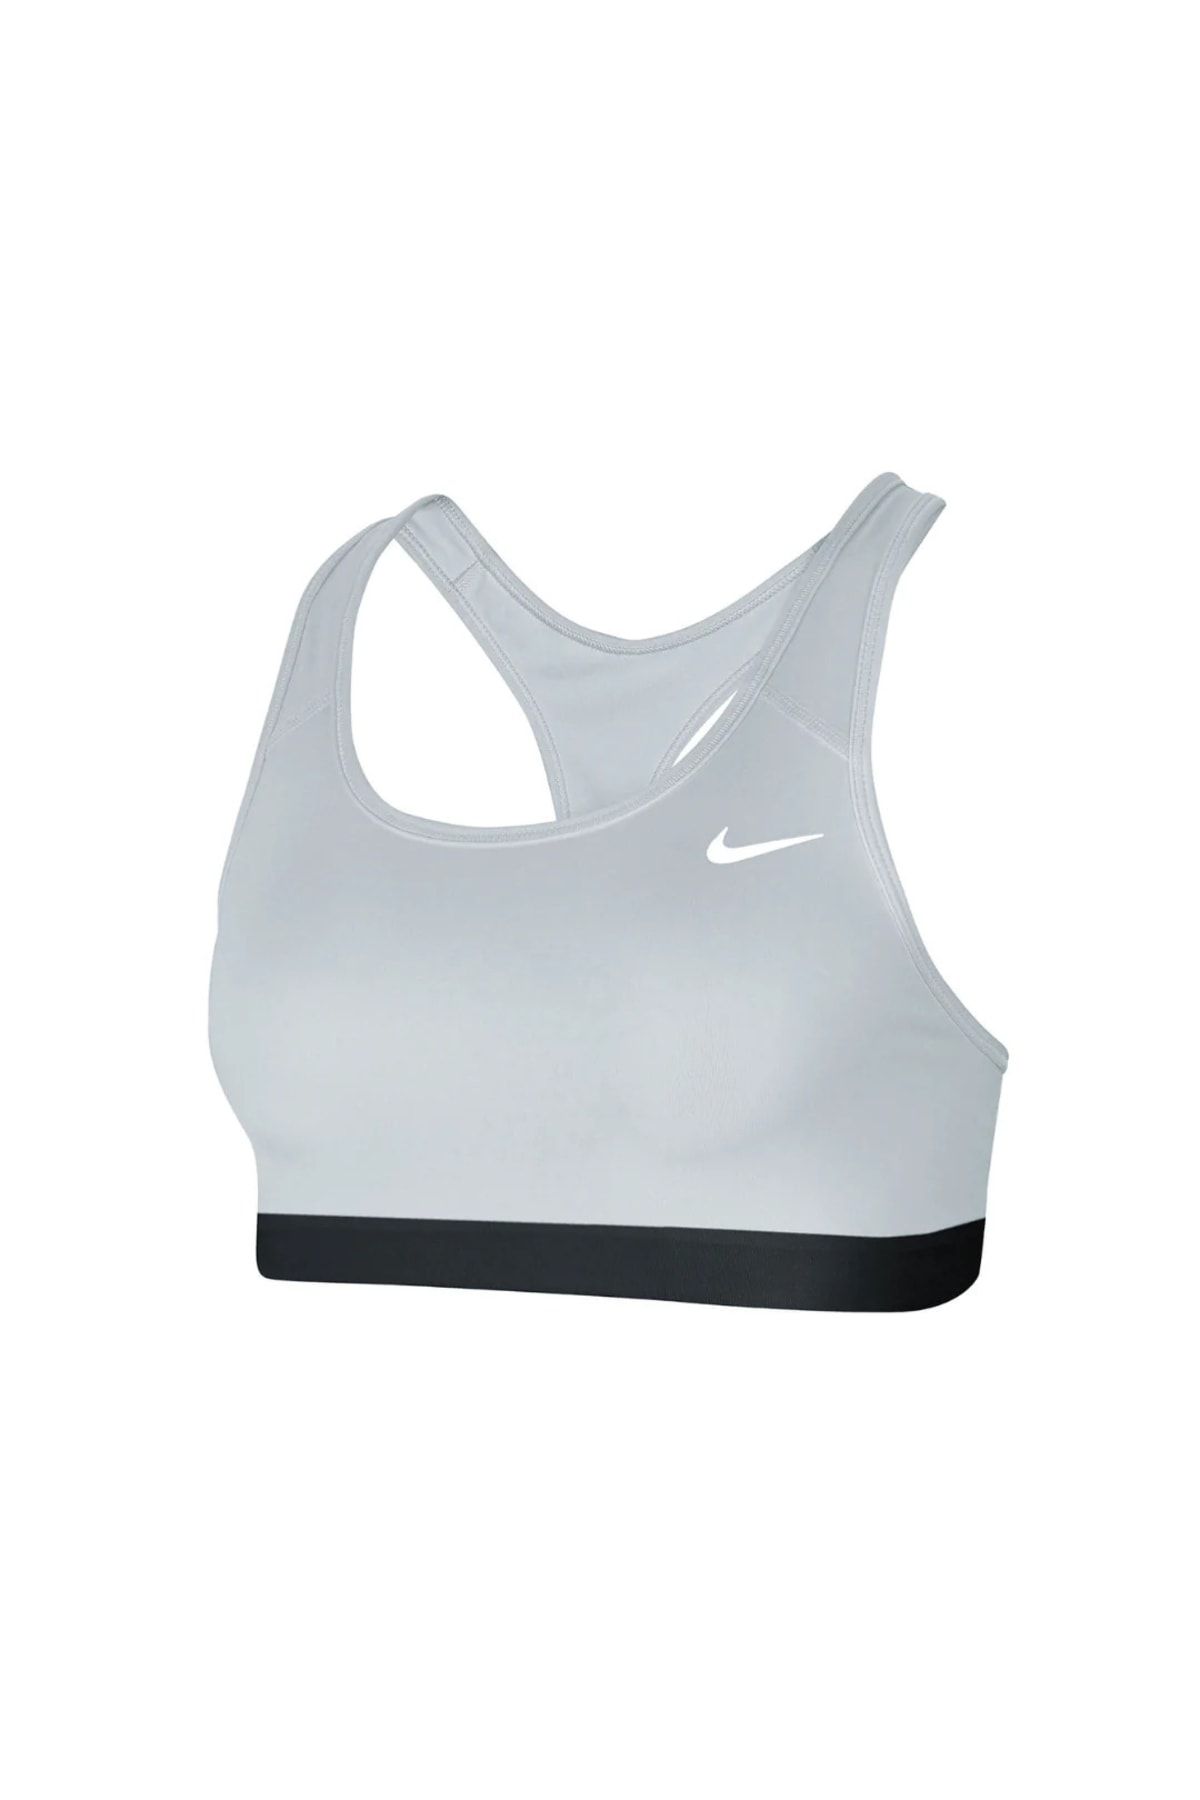 NEW Nike Women's Medium Support Padded Swoosh Sports Bra BV3636 White 